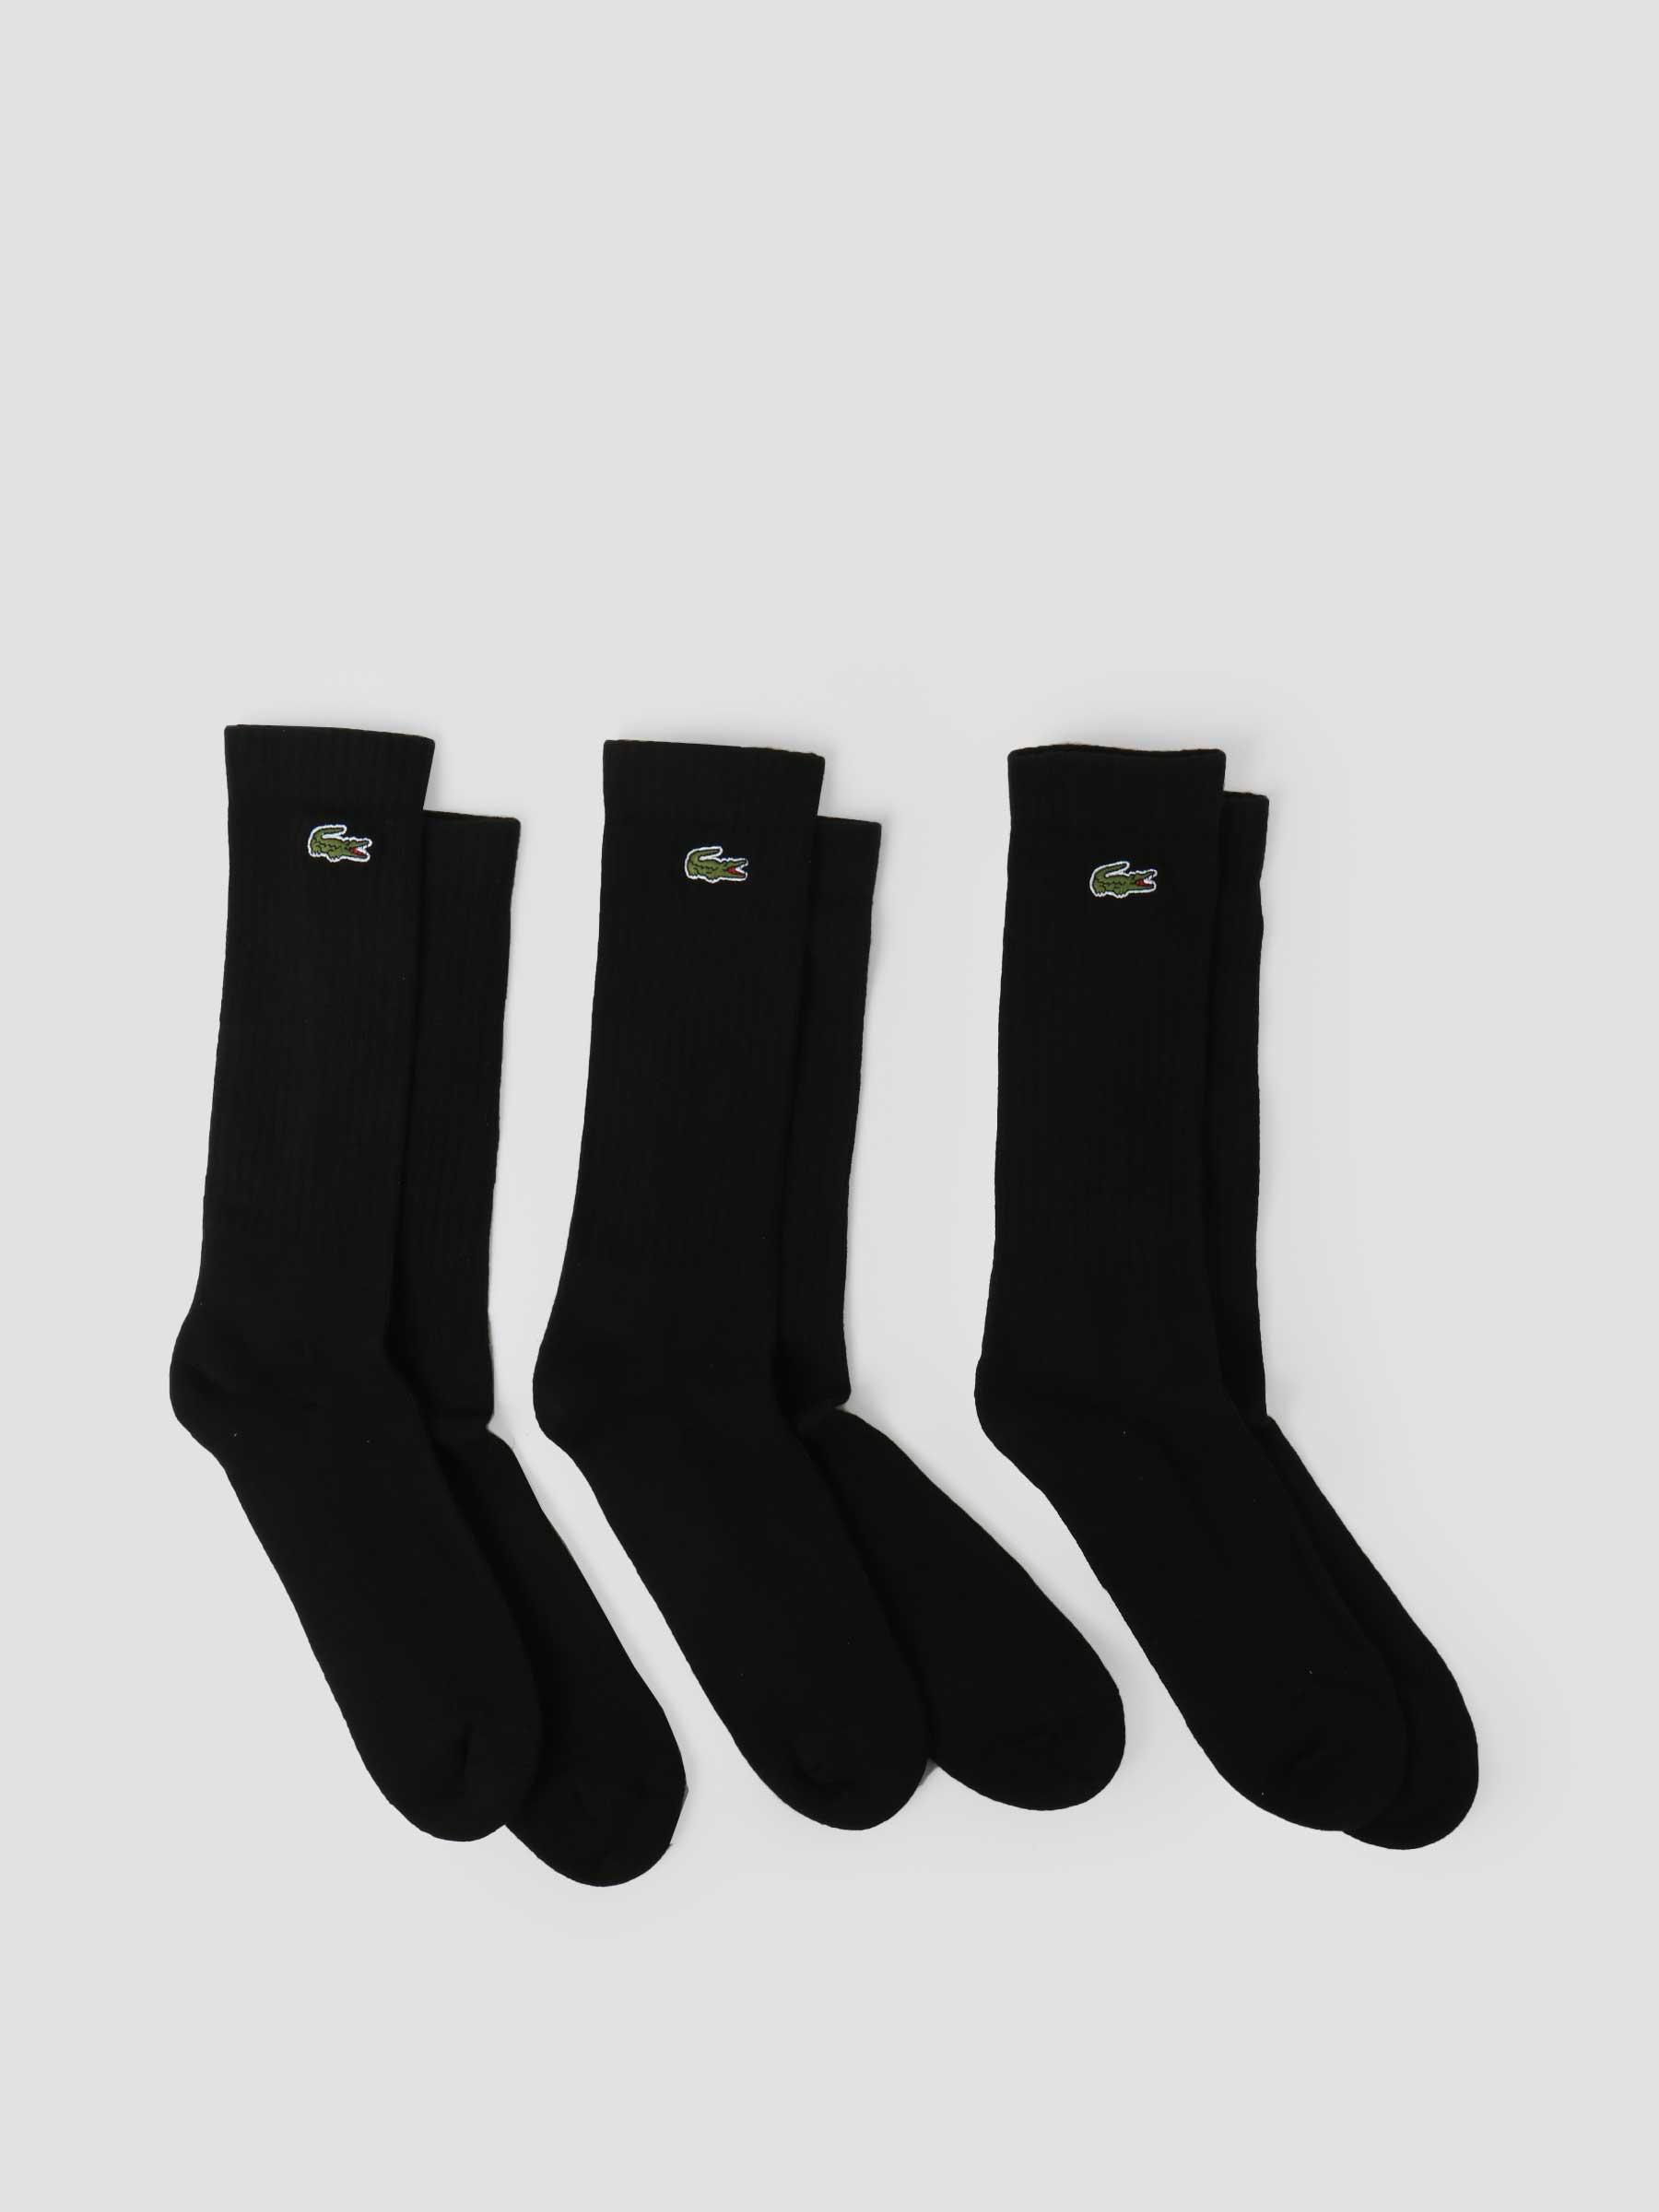 2G1C Socks 06 Black Black Black RA2099-13